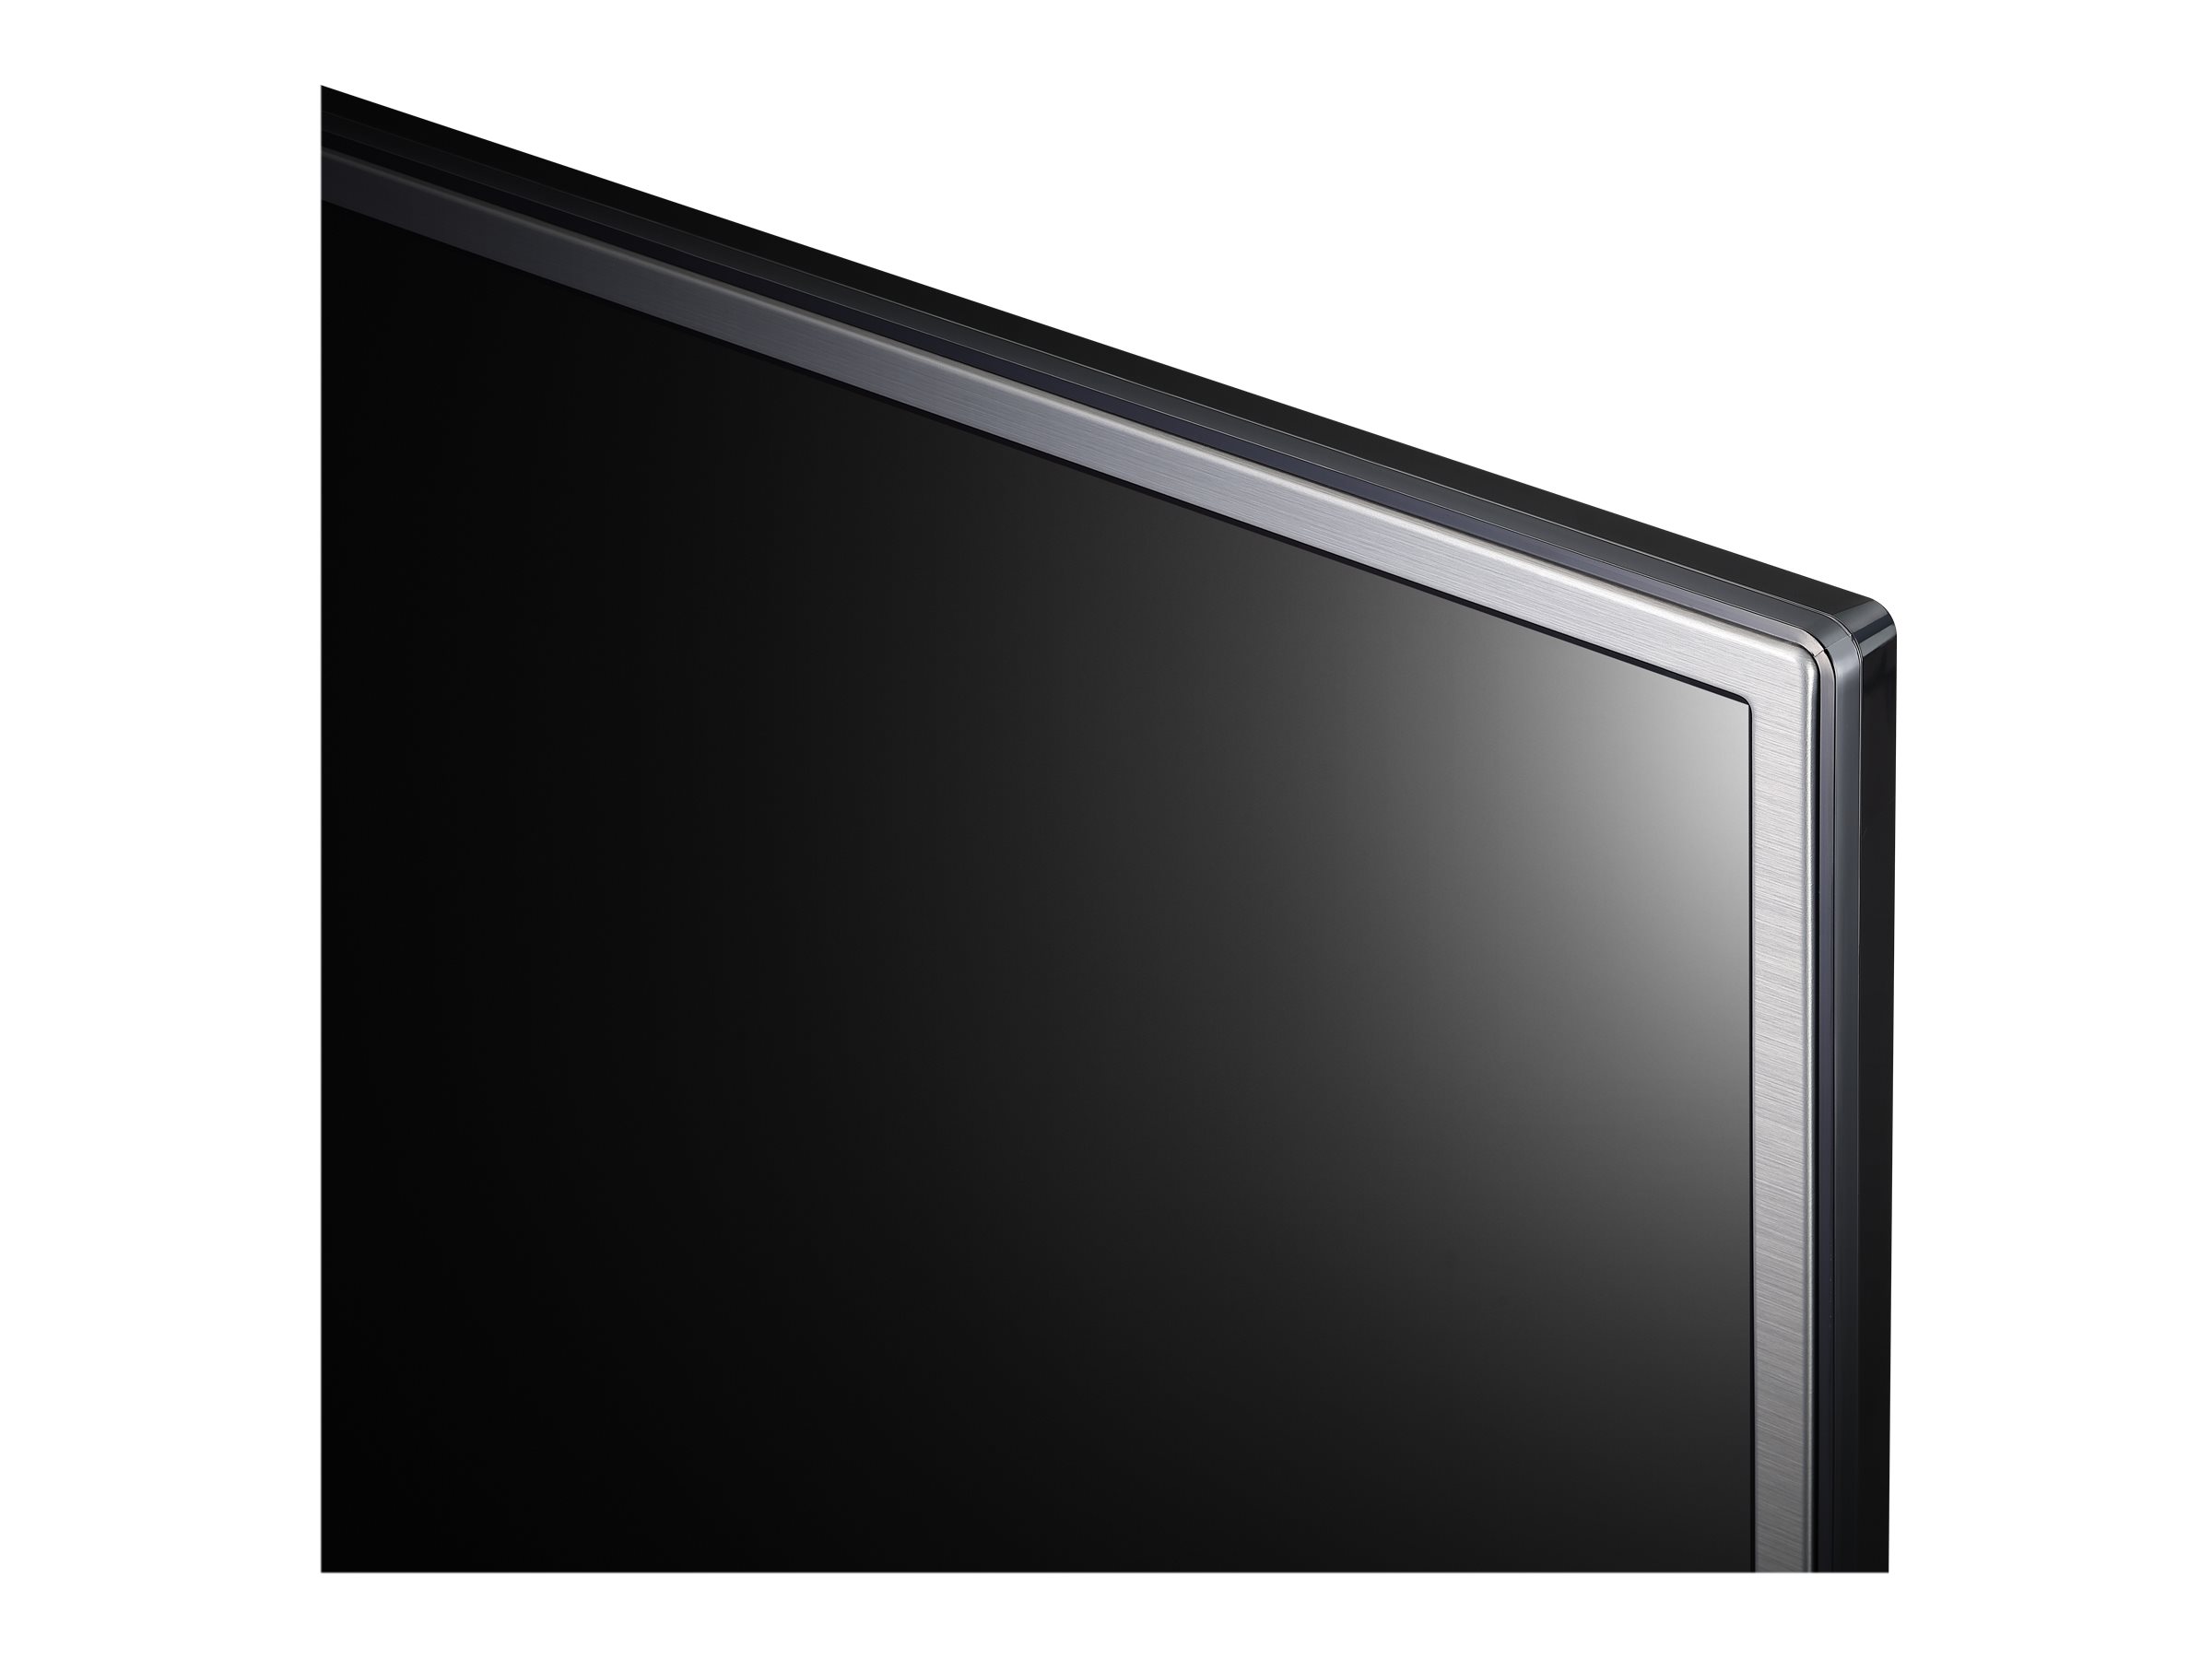 LG 55UH6030 - 55" Diagonal Class (54.6" viewable) LED-backlit LCD TV - Smart TV - webOS - 4K UHD (2160p) 3840 x 2160 - HDR - image 4 of 13